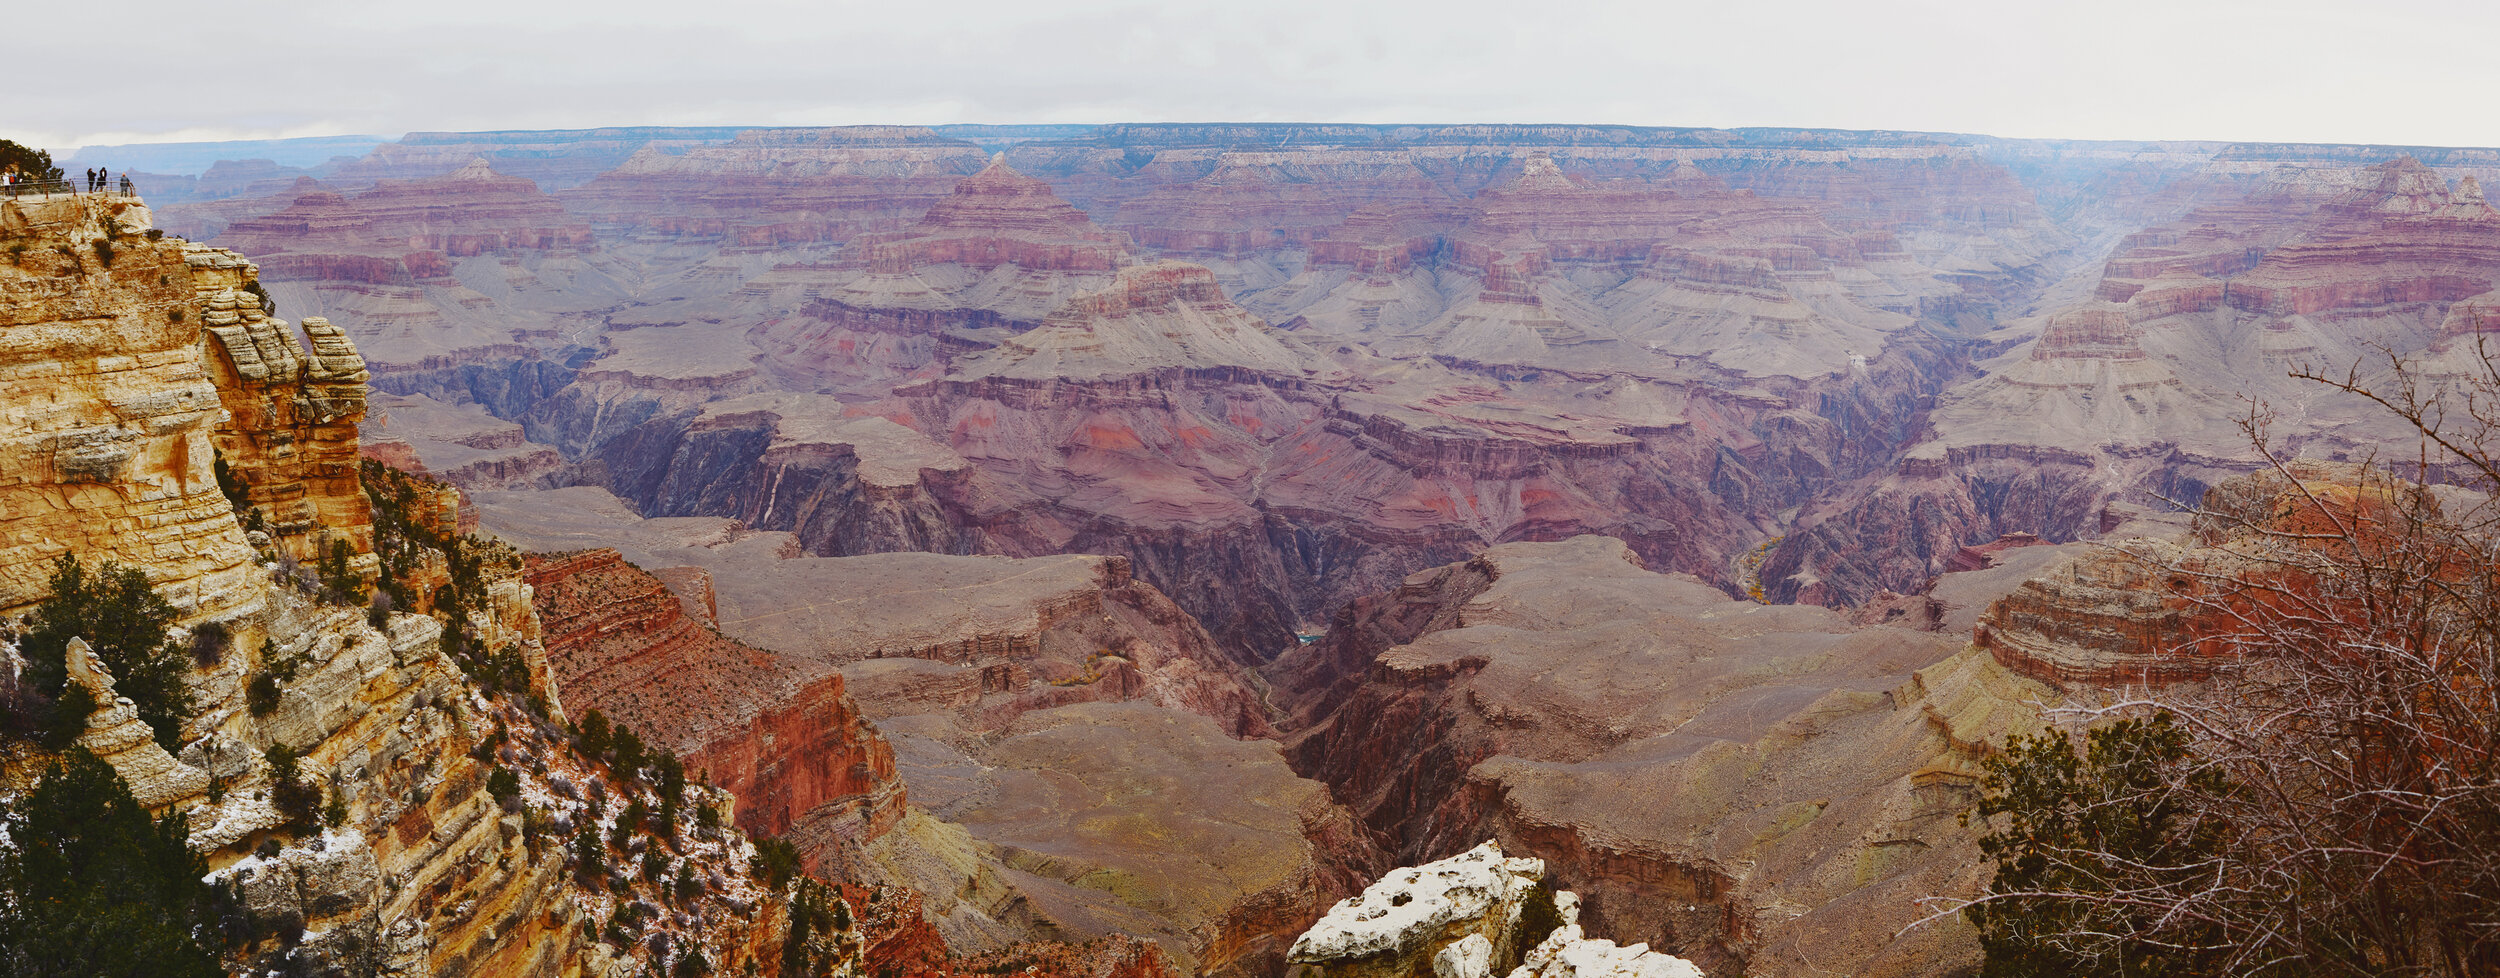 Grand Canyon Pano 3.jpg